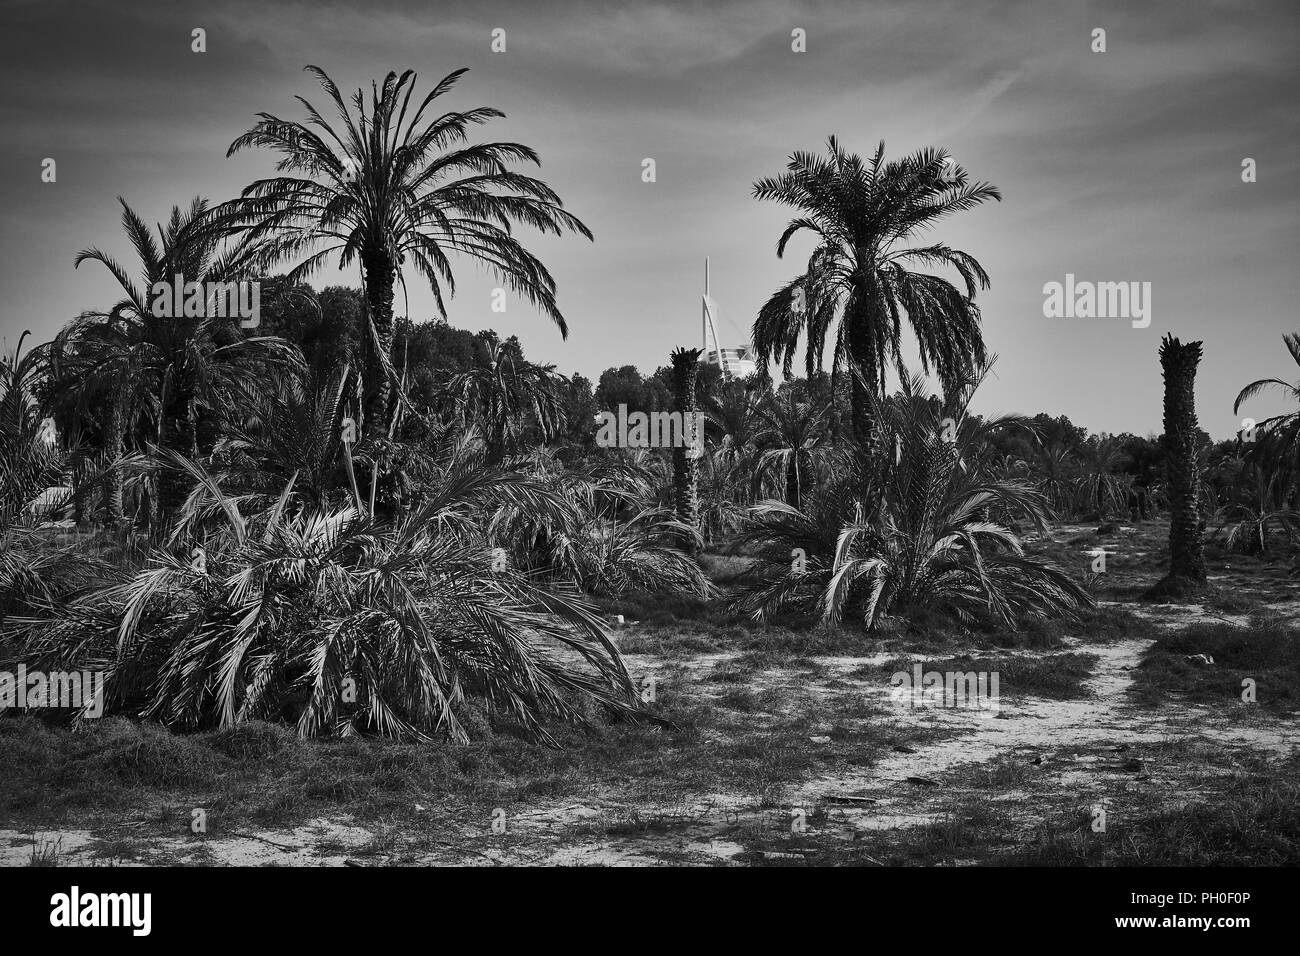 The Burj Al Arab behind palm trees Stock Photo